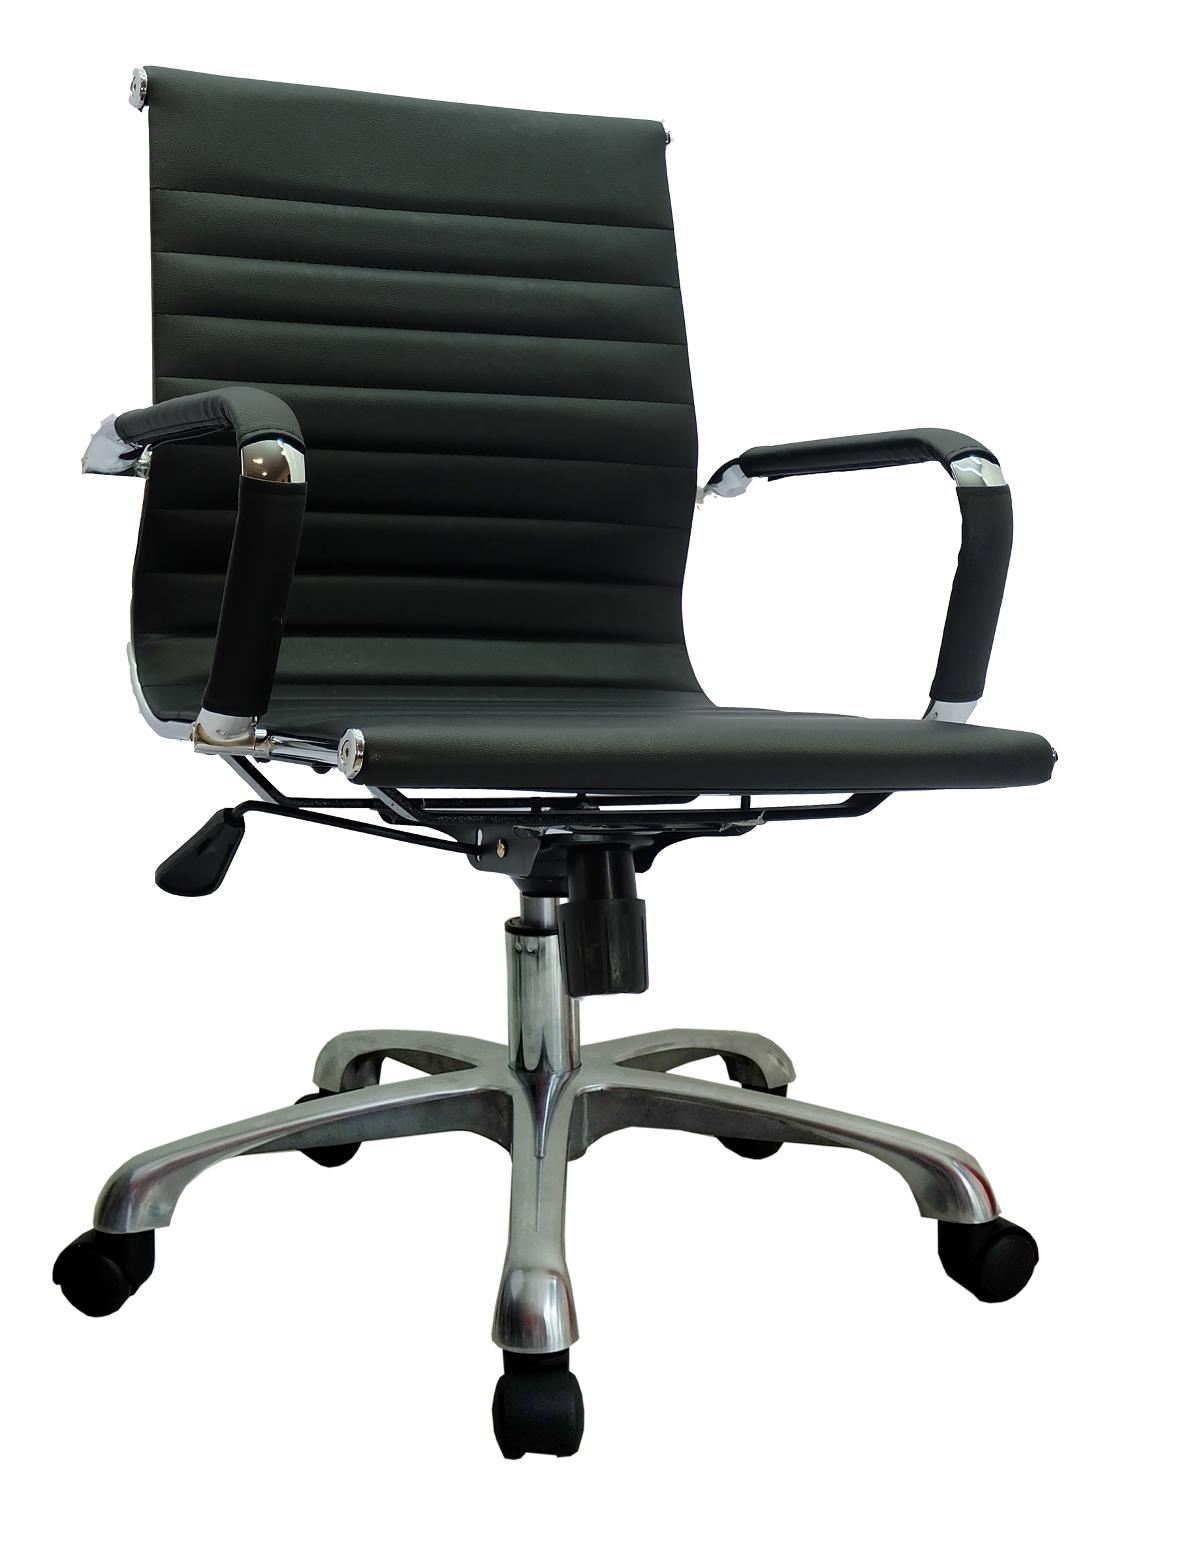 Super Chair เก้าอี้สำนักงาน รุ่น PREMIUM 531 M ขาอลูมิเนียม